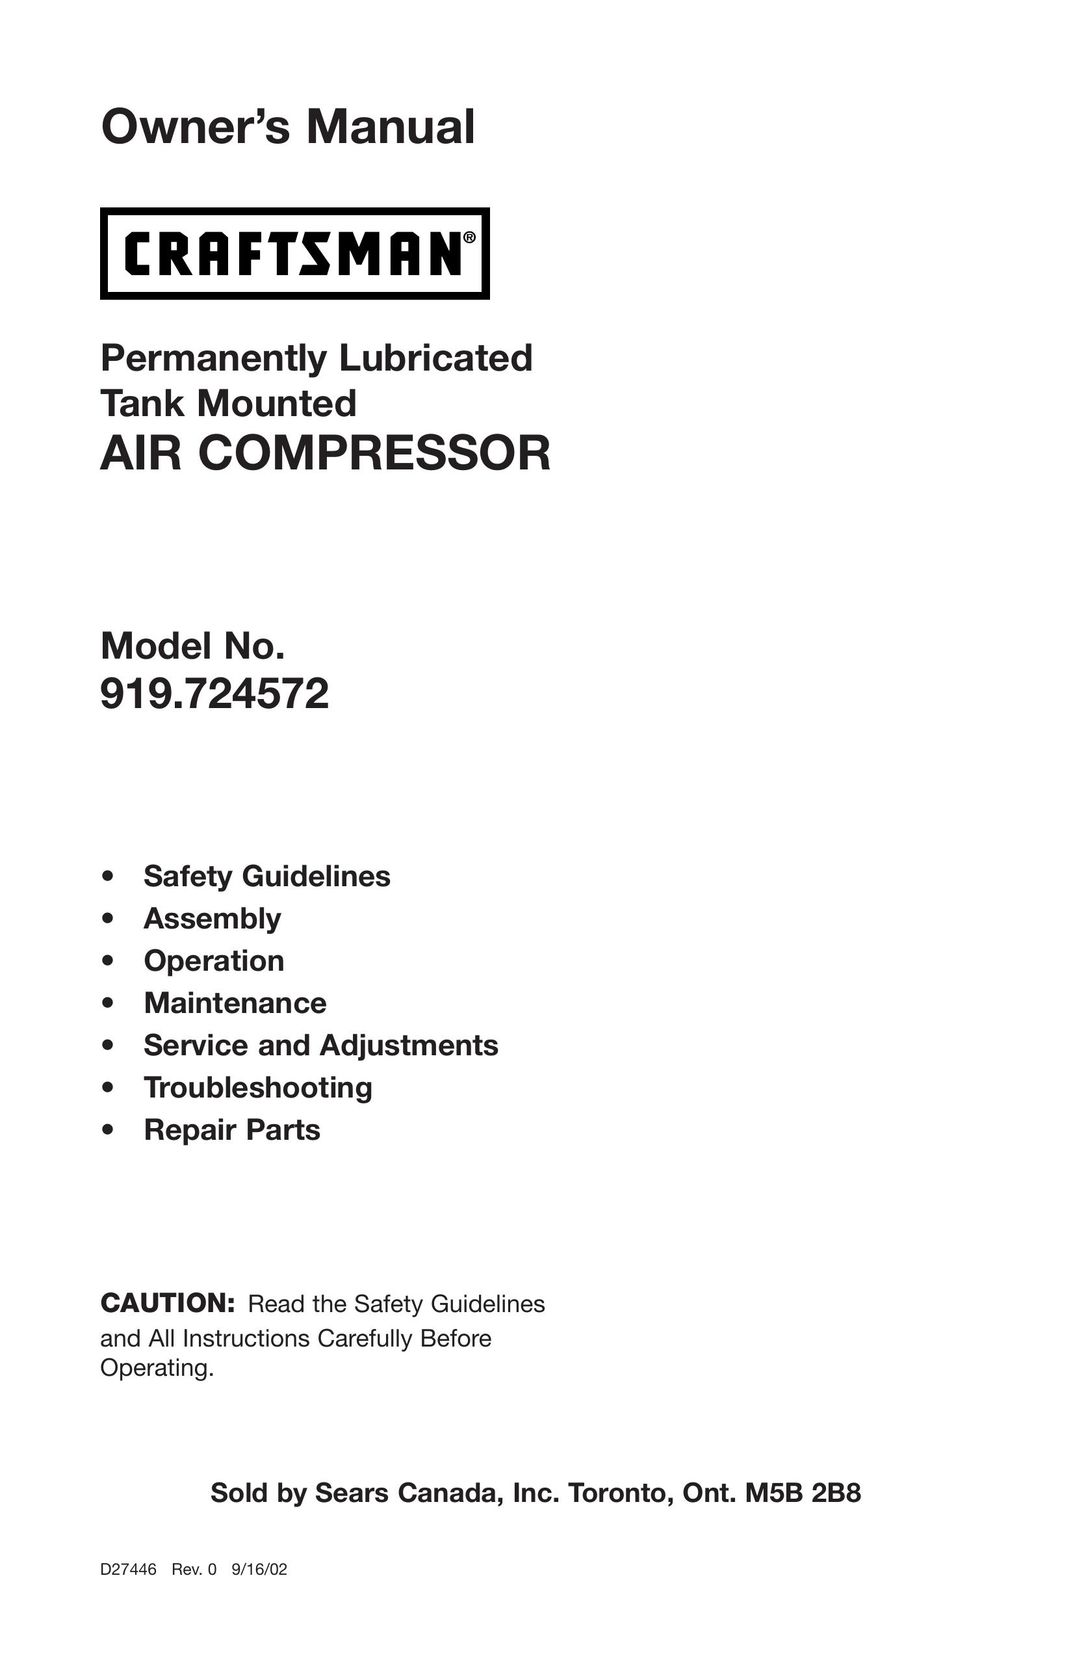 Craftsman 919.724572 Air Compressor User Manual